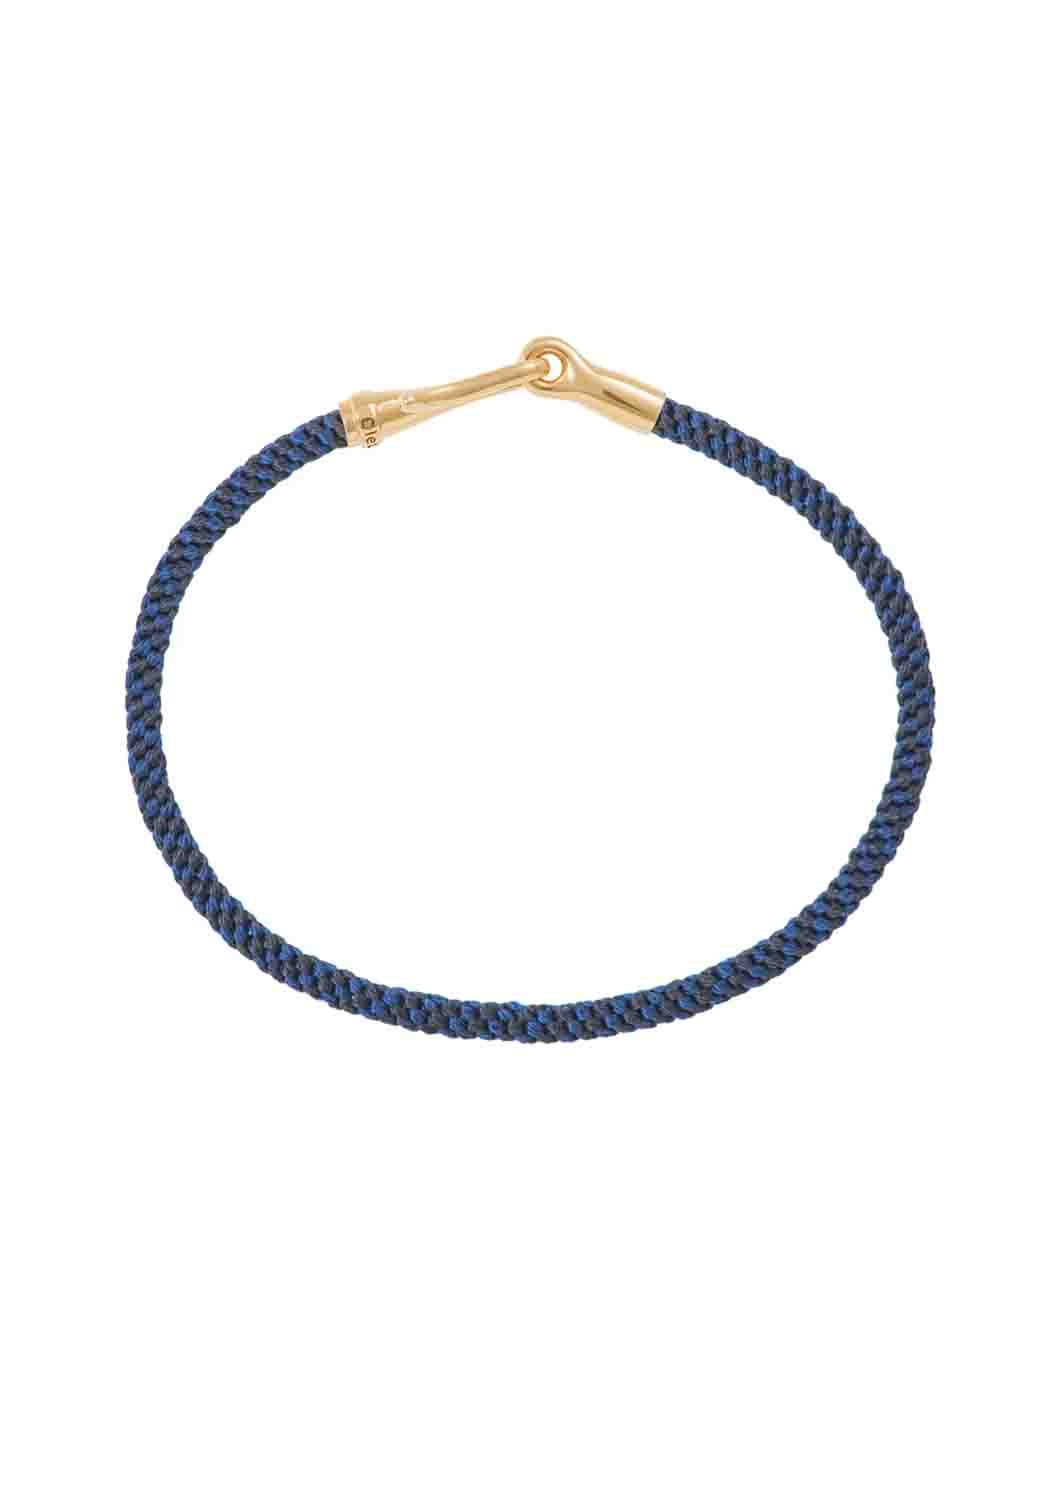 Ole Lynggaard Life 18KYG Midnight Blue Rope Bracelet | Ref. A3040-406 | OsterJewelers.com